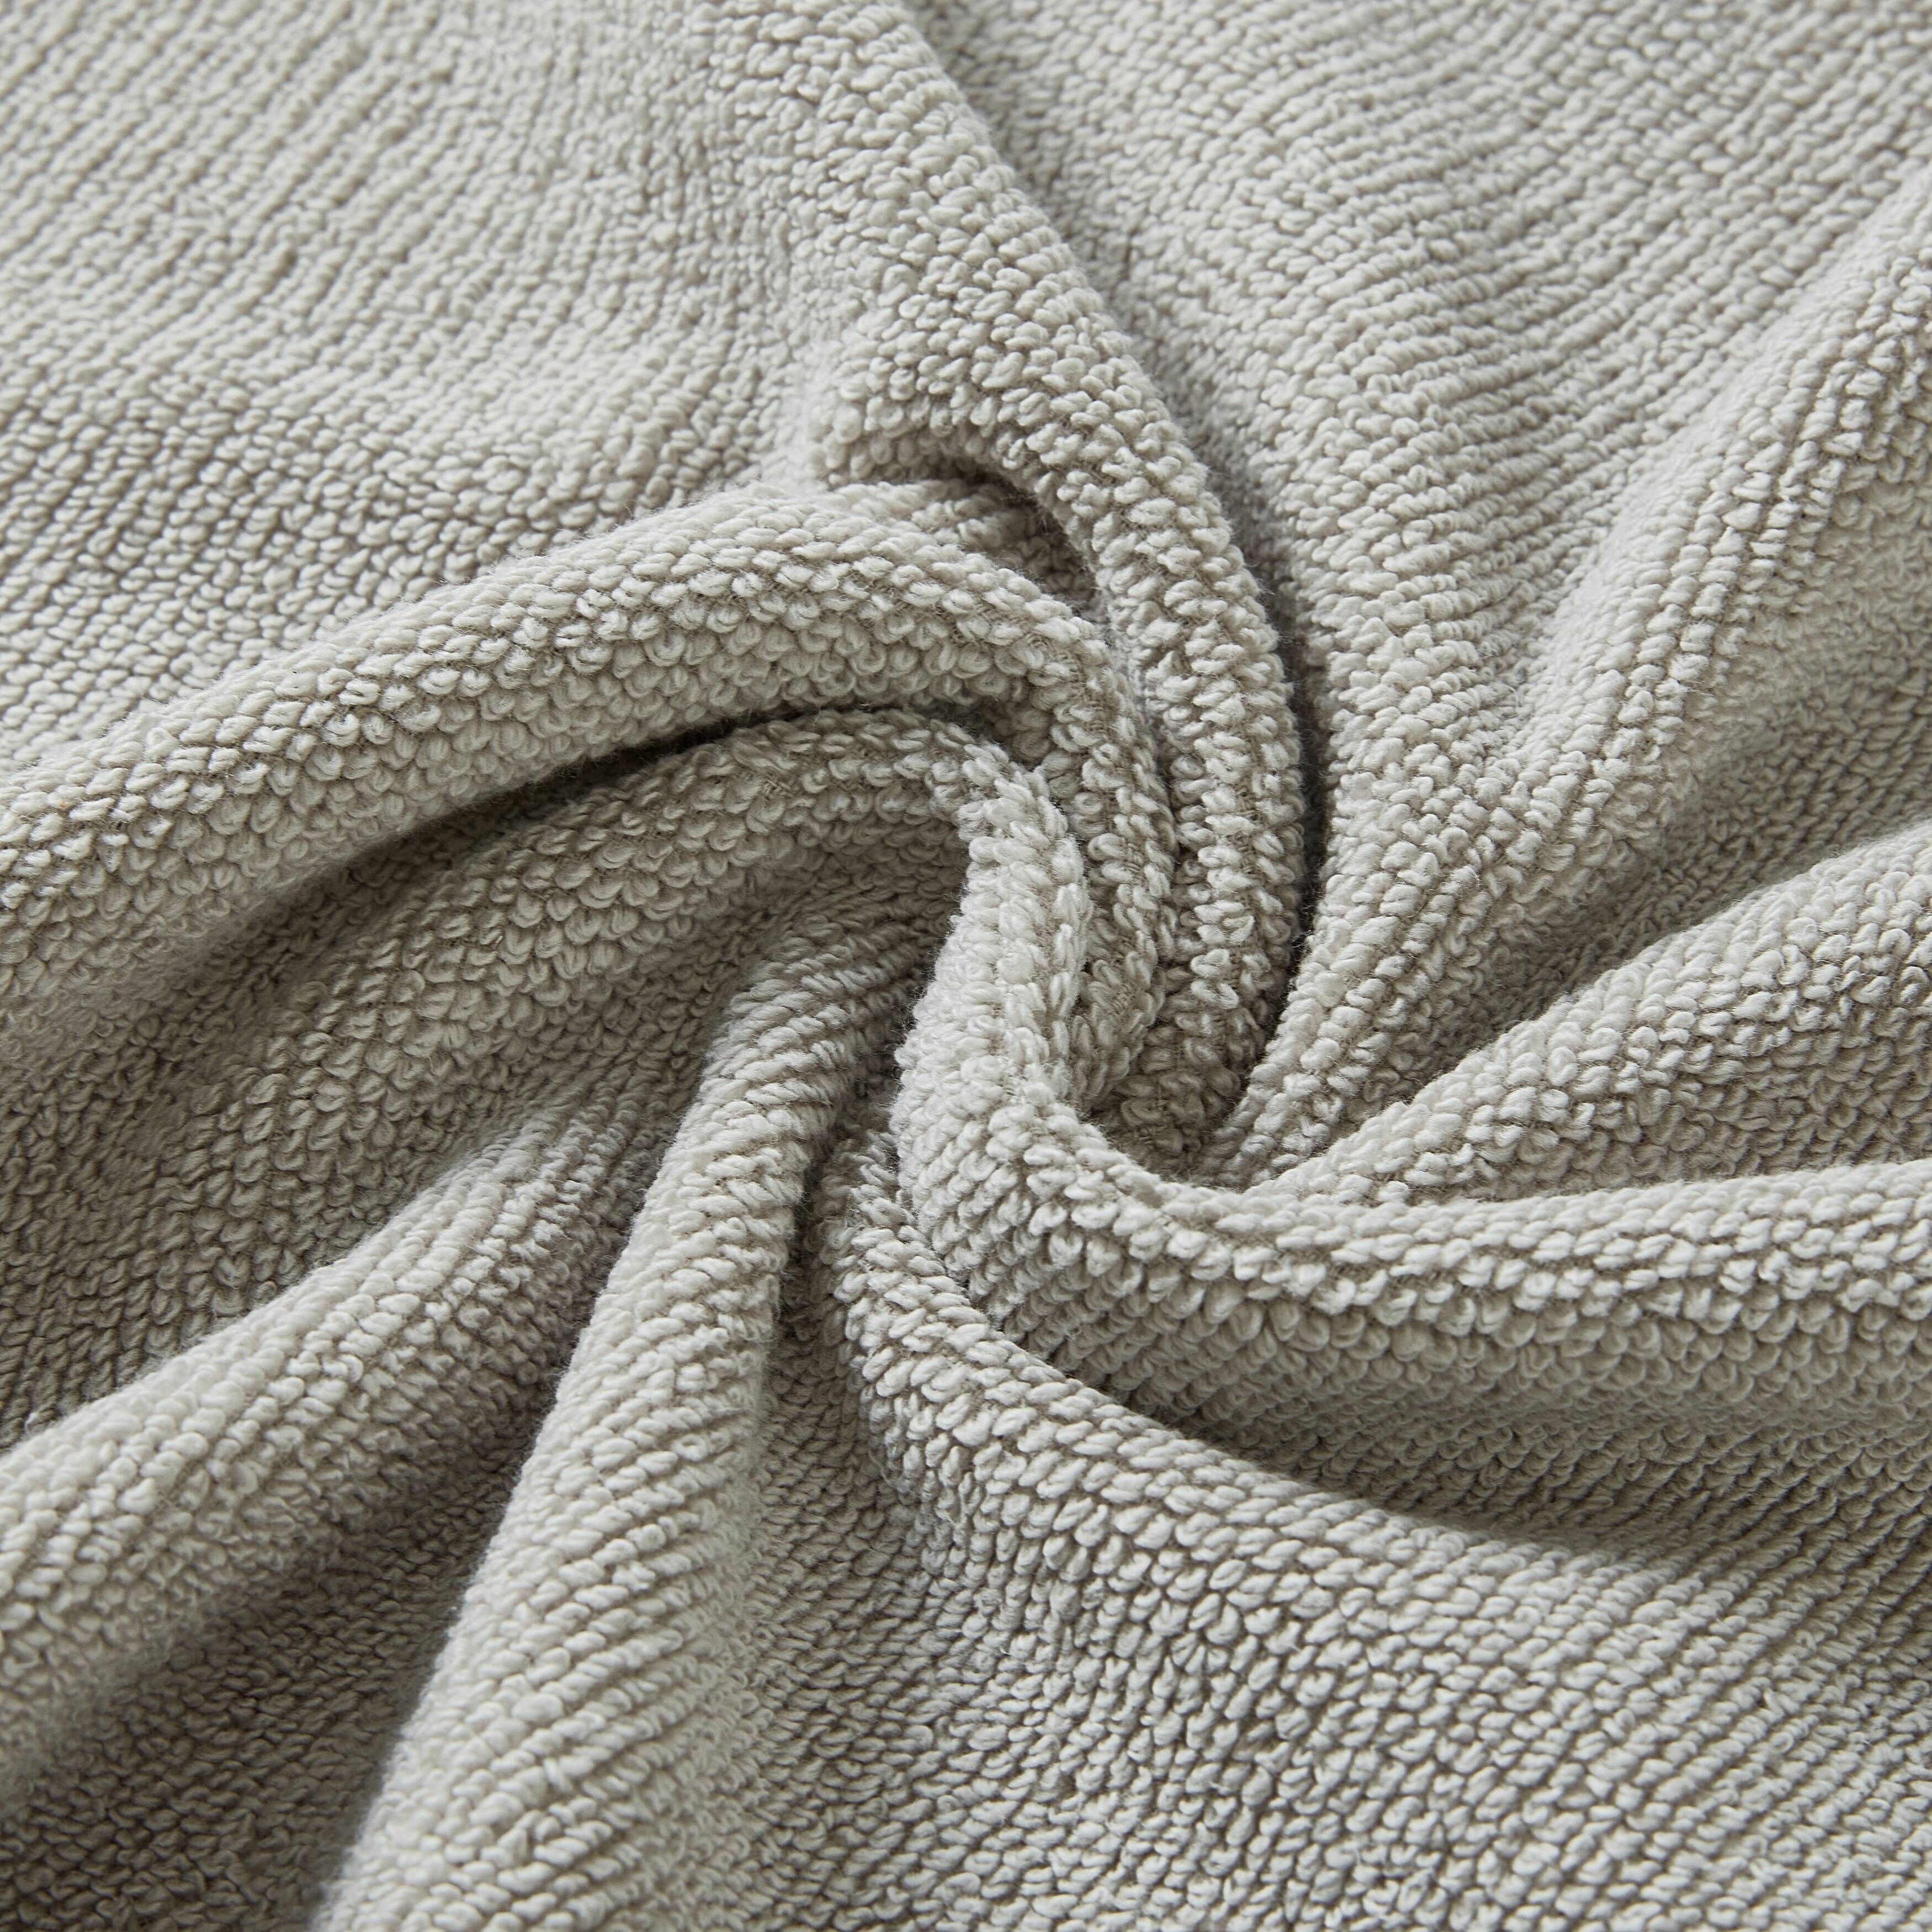 https://ak1.ostkcdn.com/images/products/is/images/direct/c1ba2c9e9831fa9f386699bb80403adb50559ec3/Vera-Wang-Sculpted-Pleat-Solid-Cotton-Multi-Size-Towel-Set.jpg